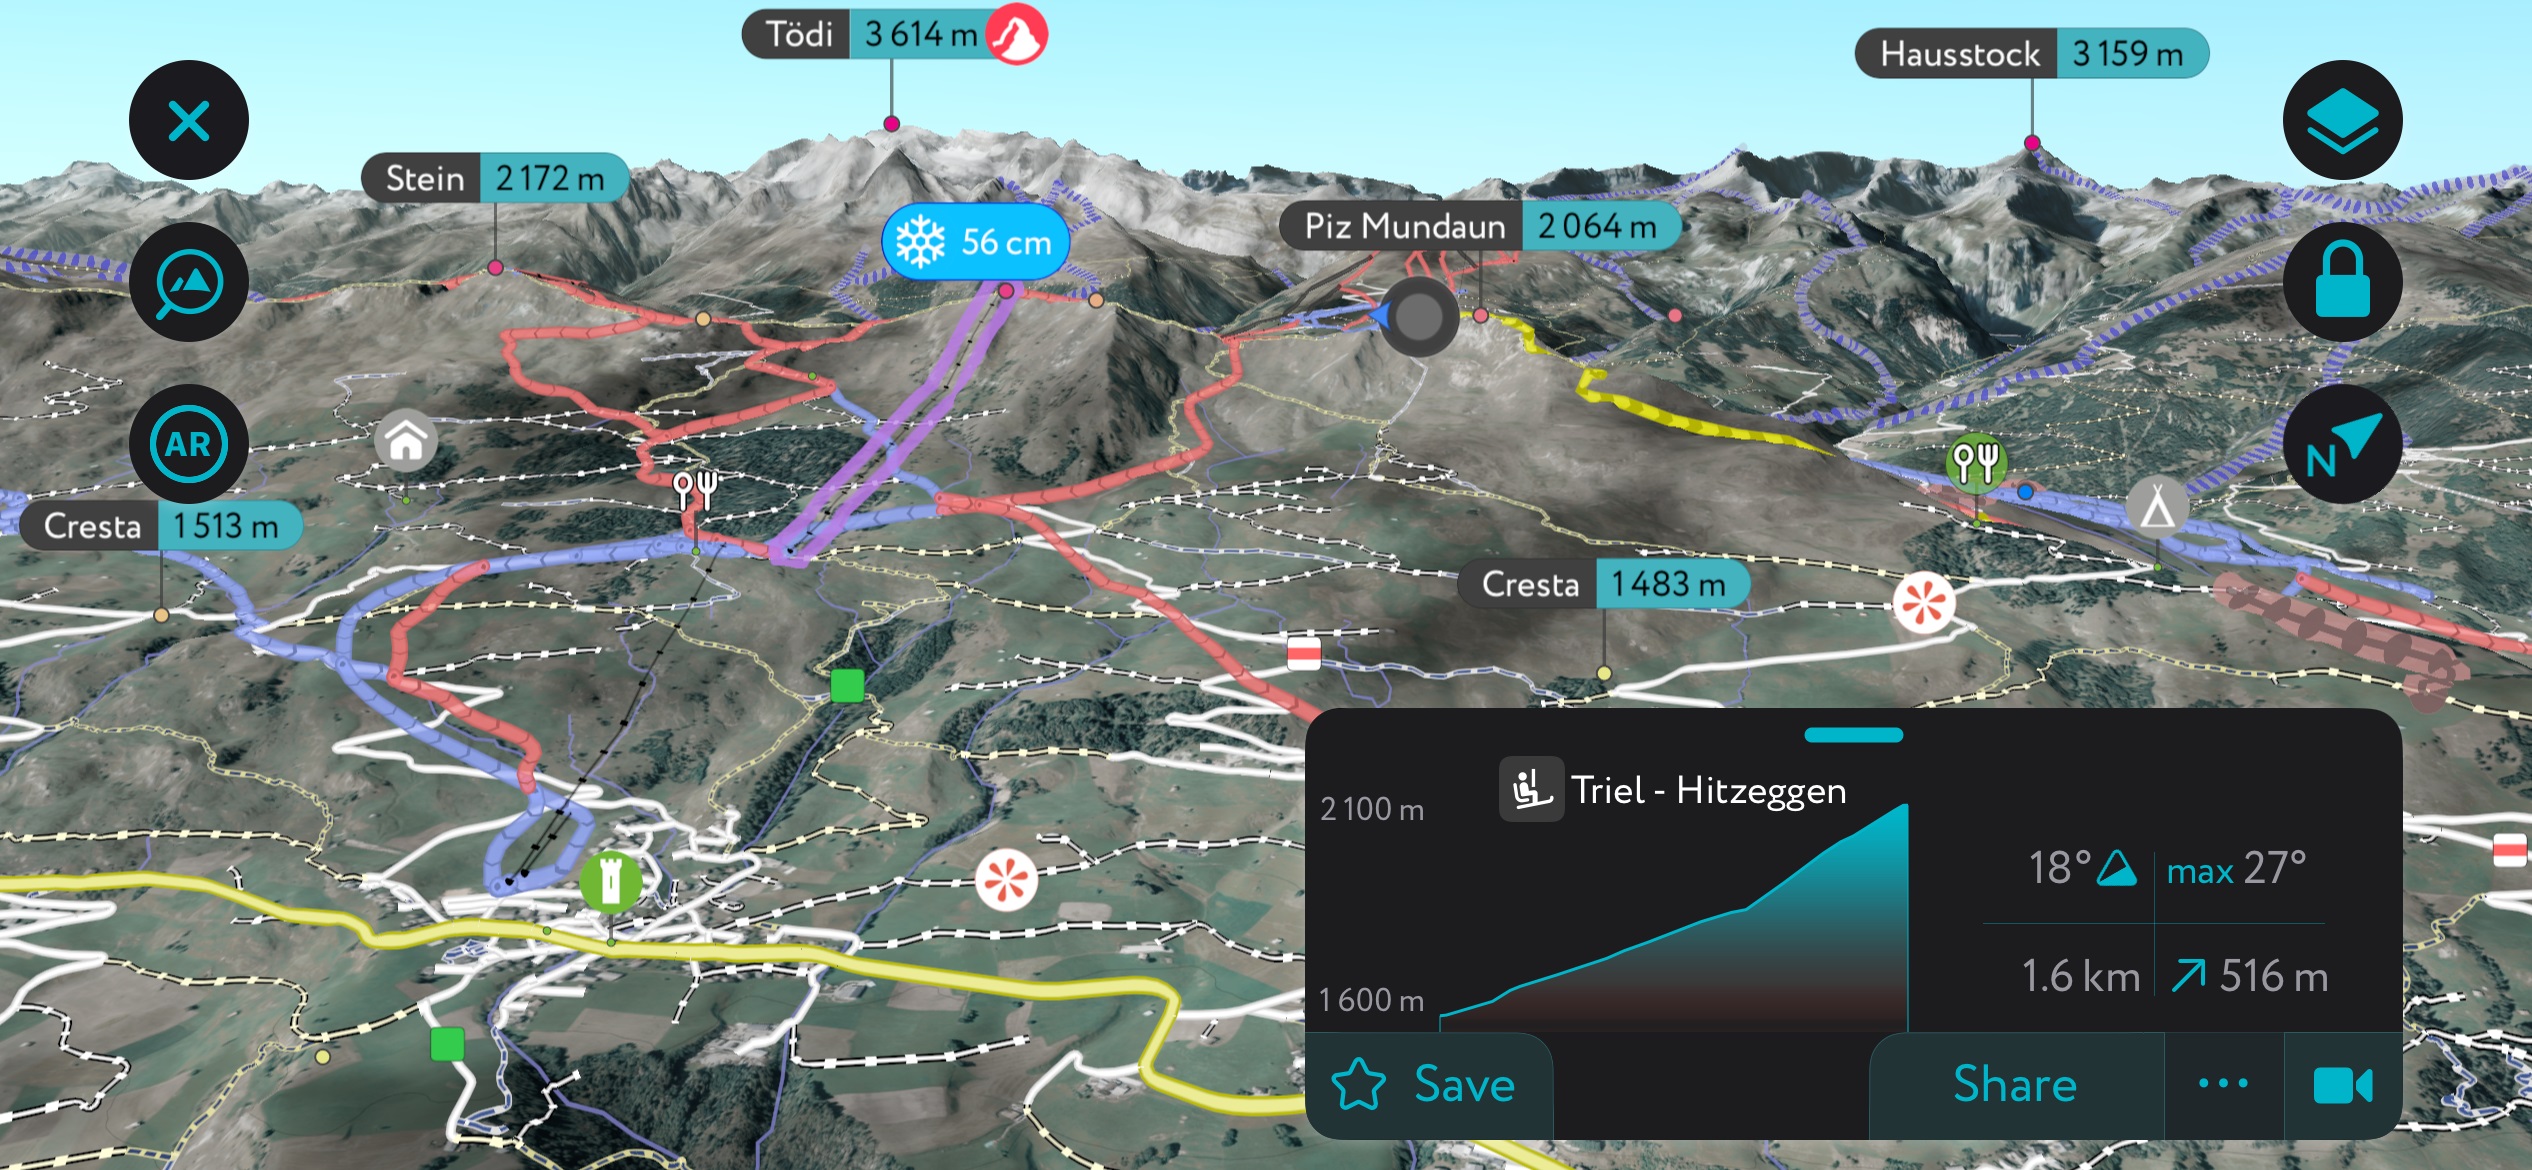 Obersaxen-​Mundaun-Val Lumnezia on PeakVisor’s mobile. Surselva